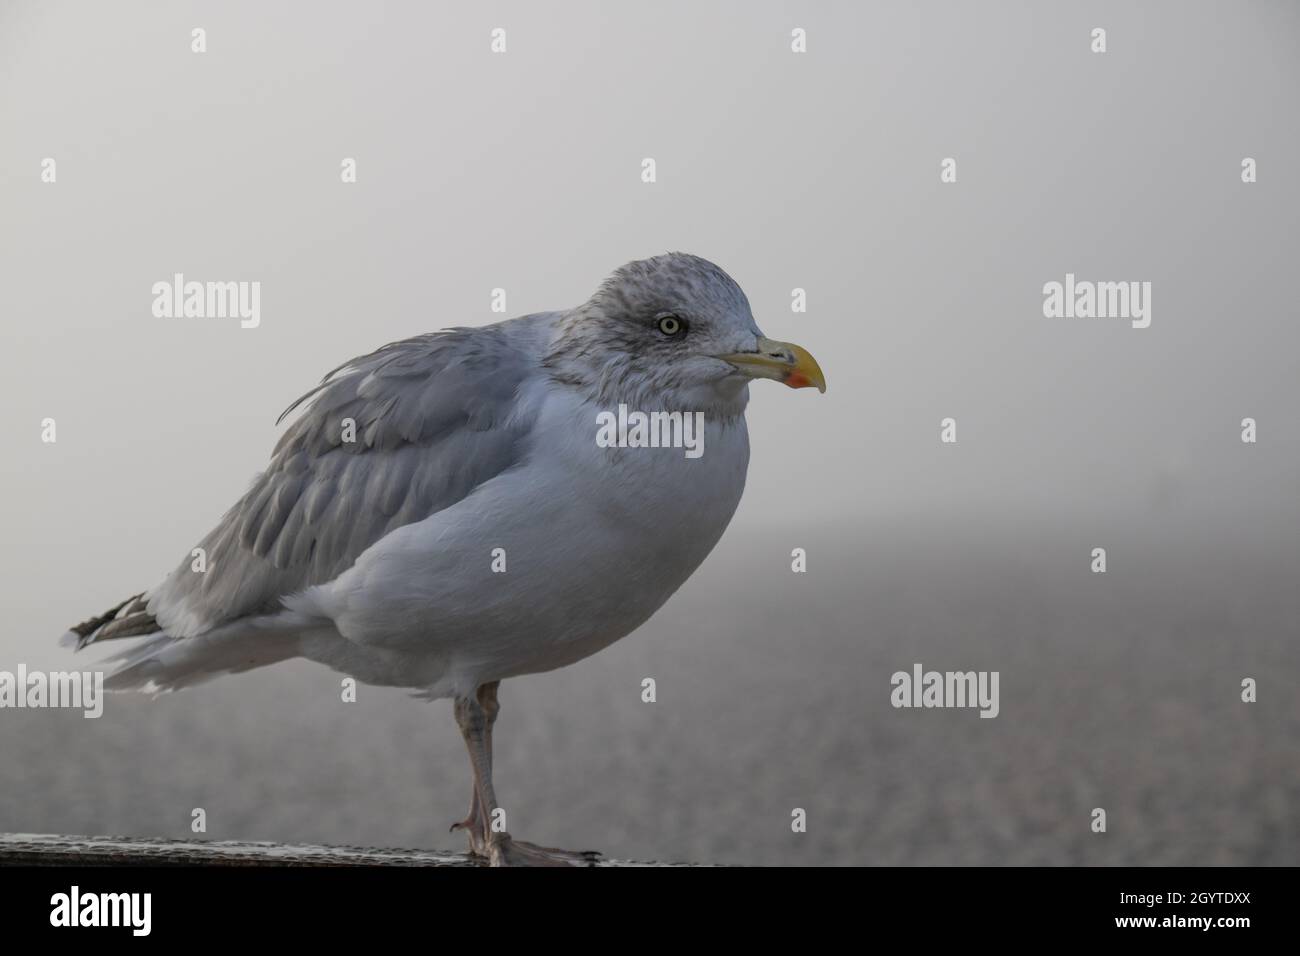 White gull on a scandinavian beach at a hazy morning. Stock Photo